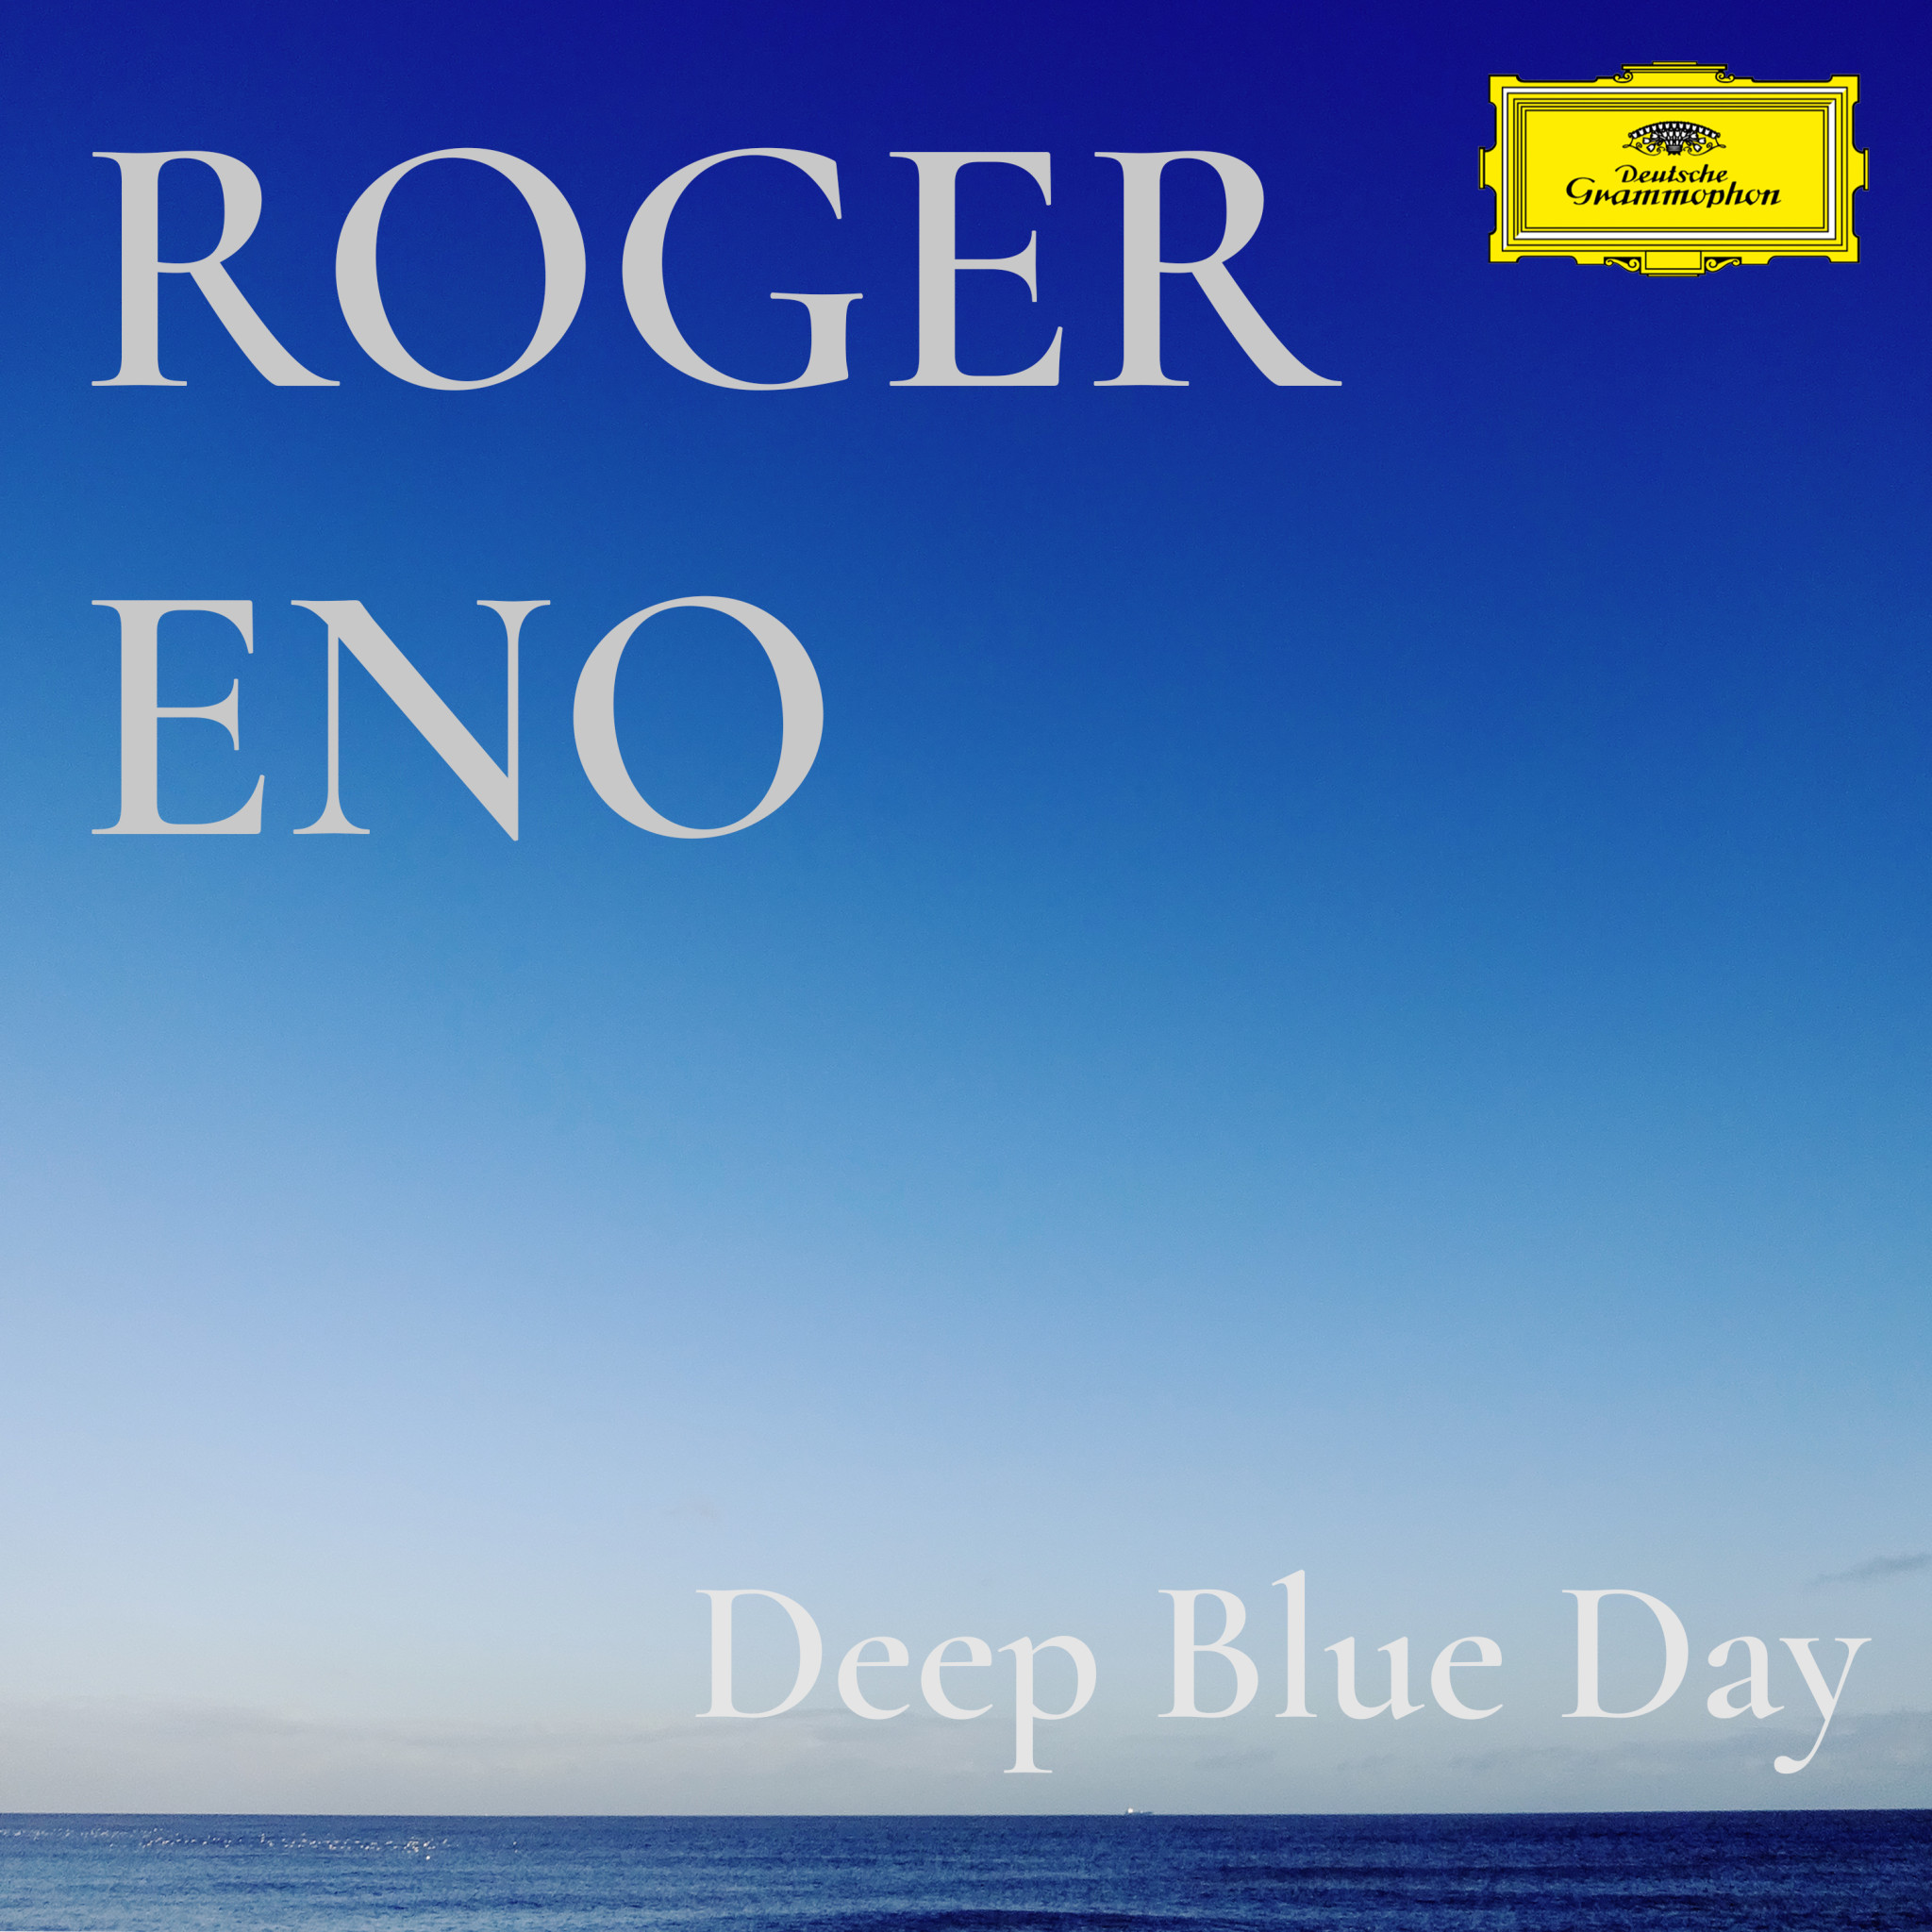 Roger Eno: Deep Blue Day